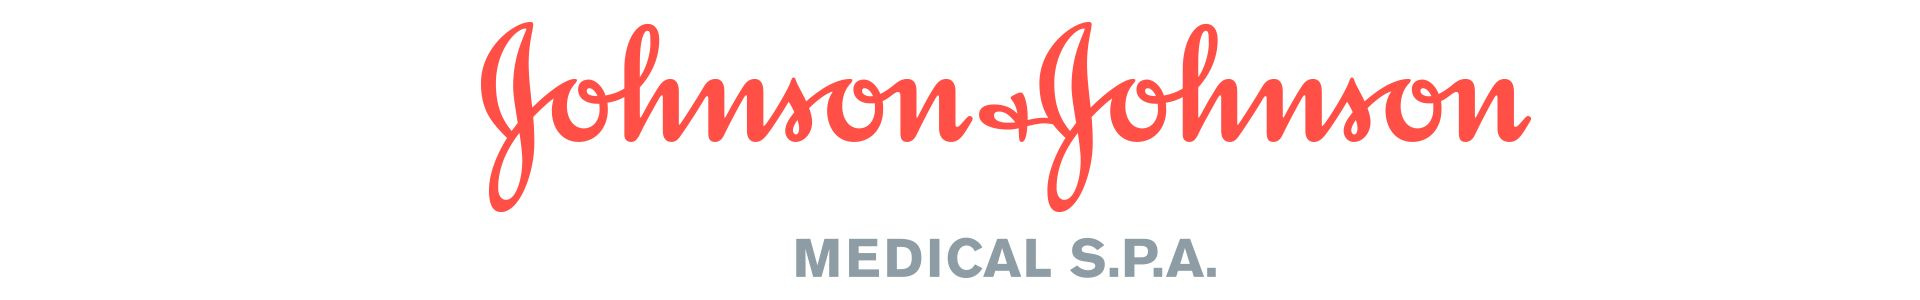 Johnson & Johnson Medical - 